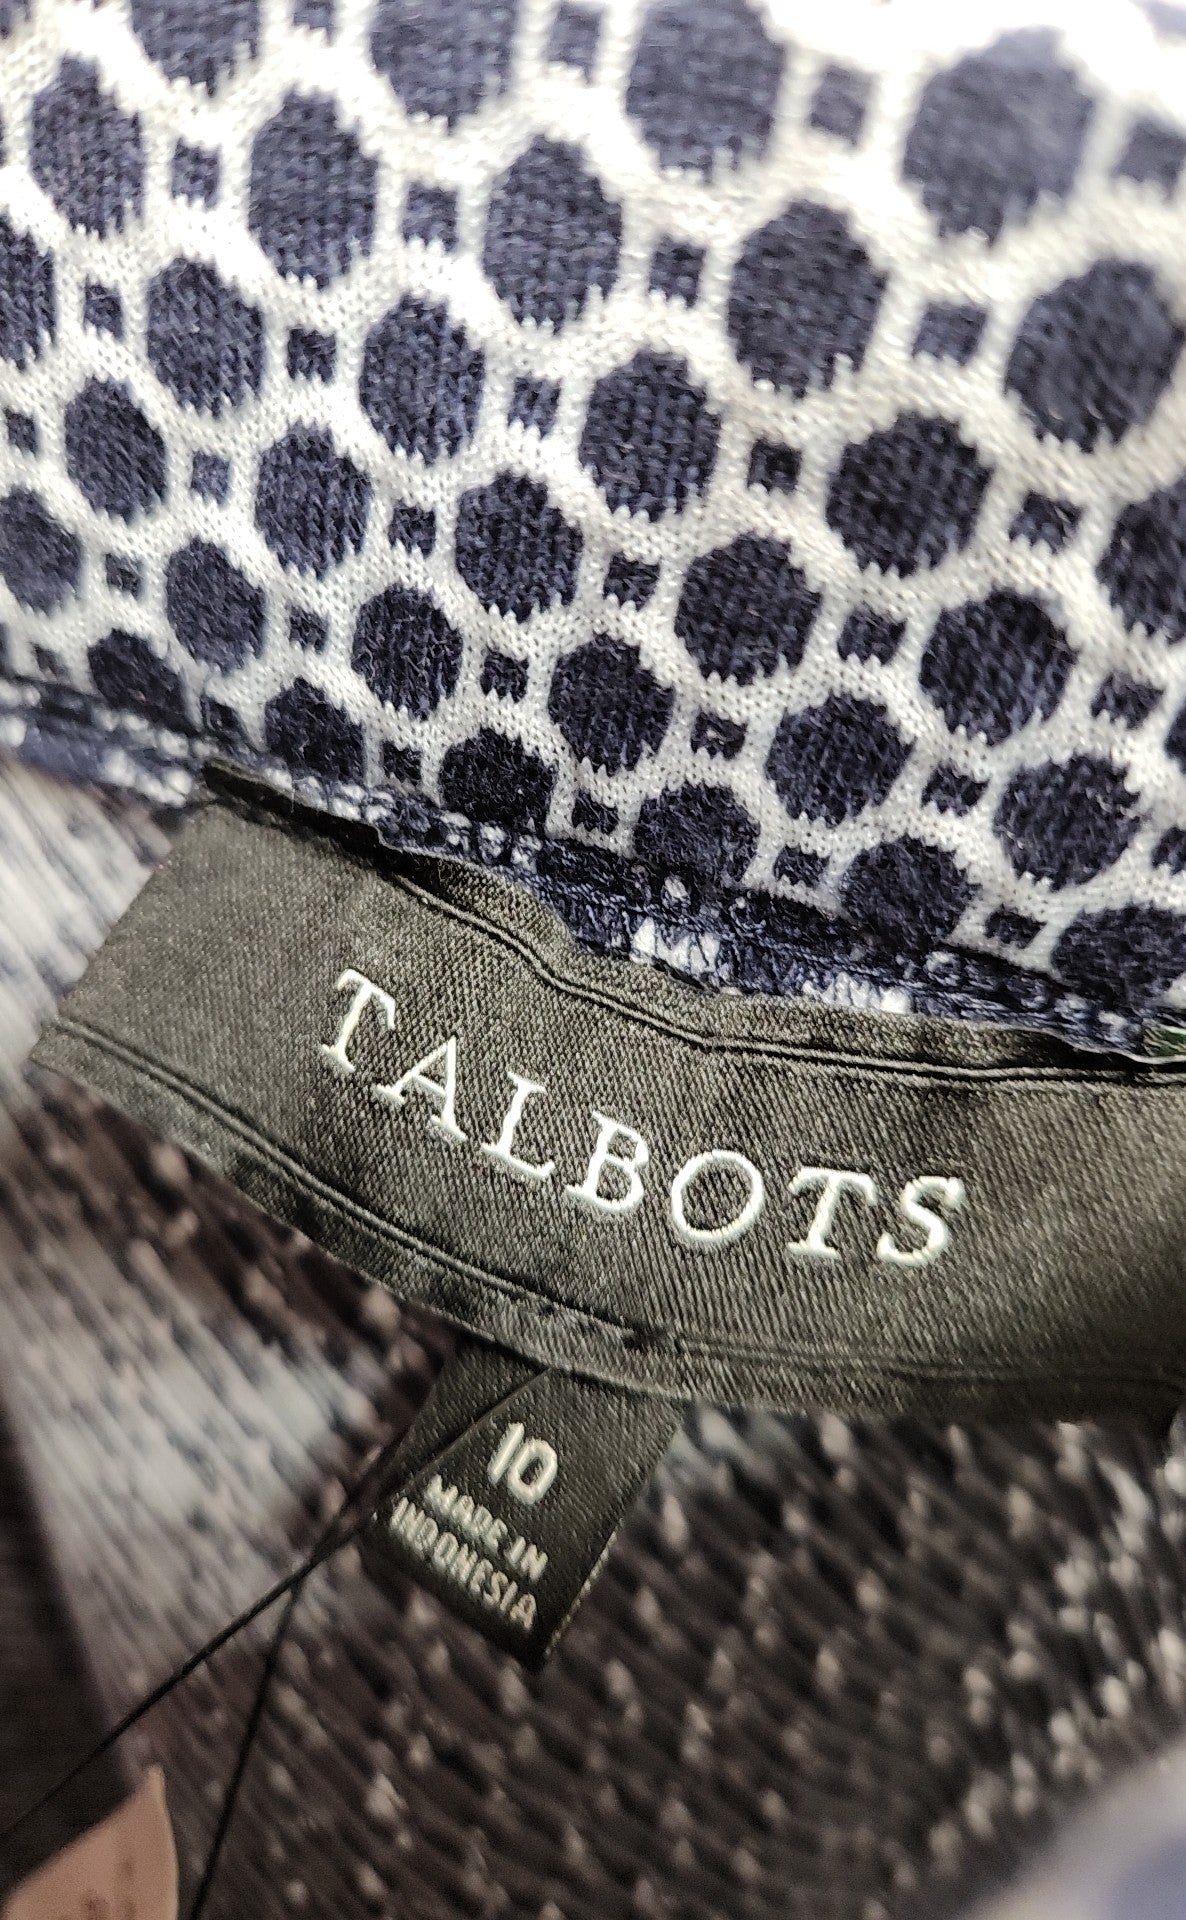 Talbots Women's Size 10 Navy Skirt NWT